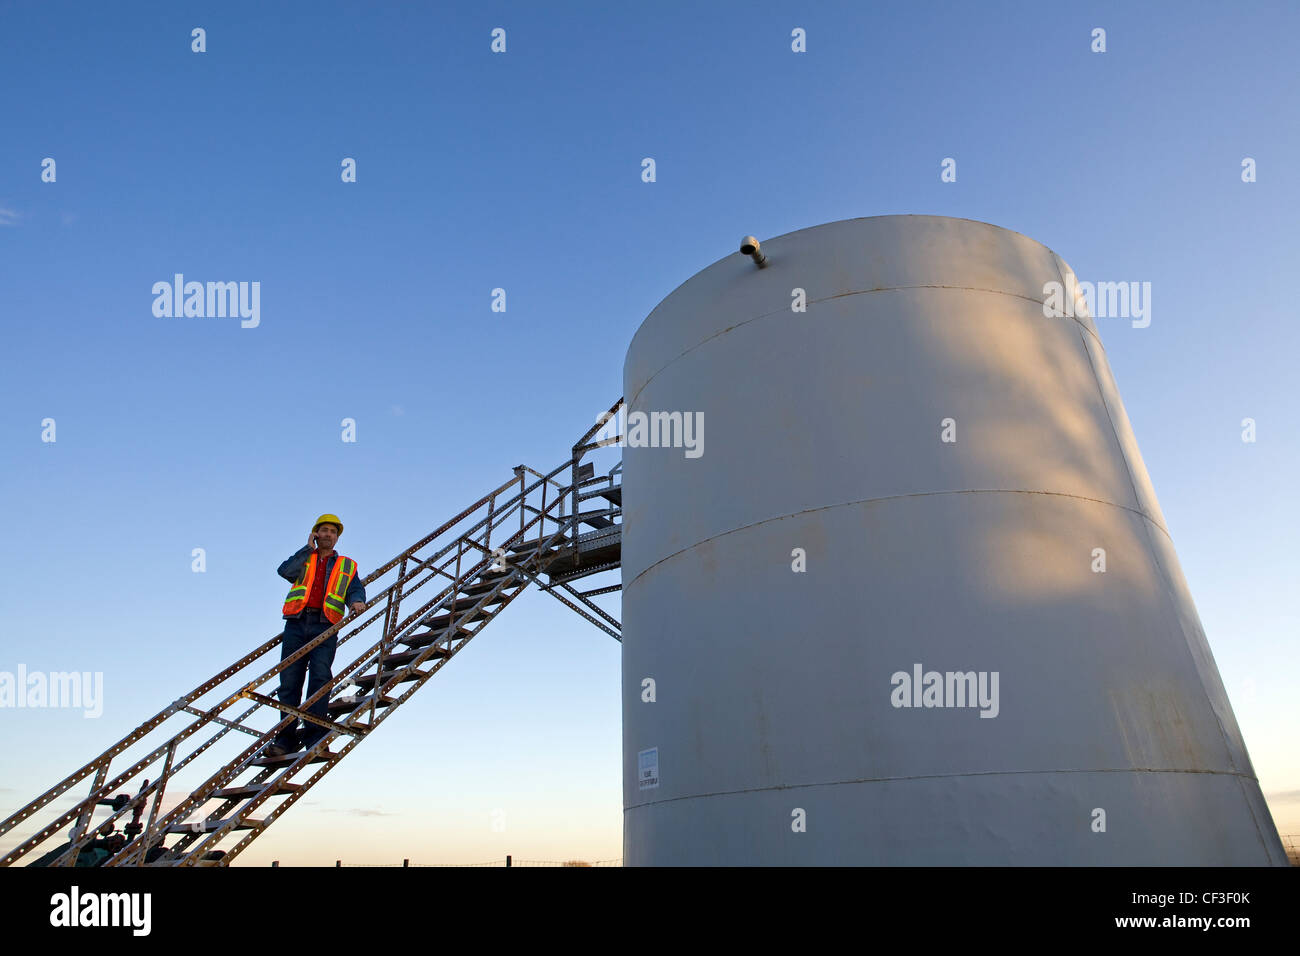 Oil industry worker on storage tank platform talking on phone. Stock Photo